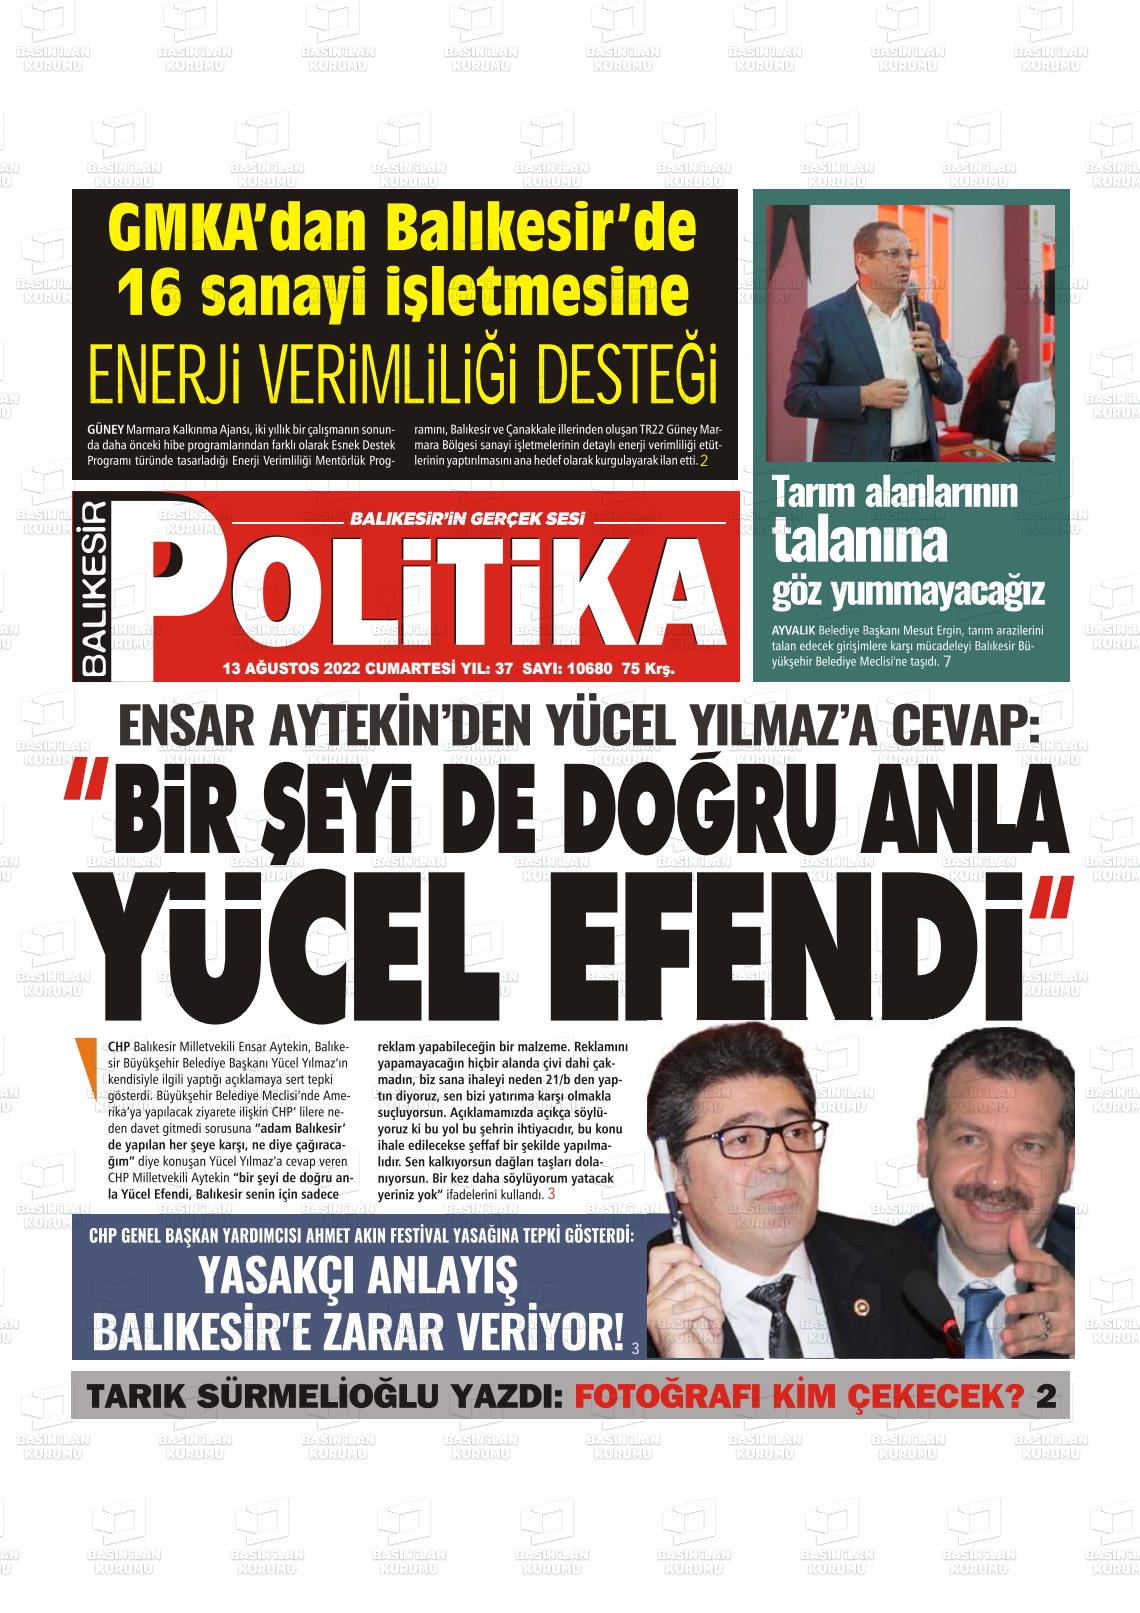 13 Ağustos 2022 Balıkesir Politika Gazete Manşeti